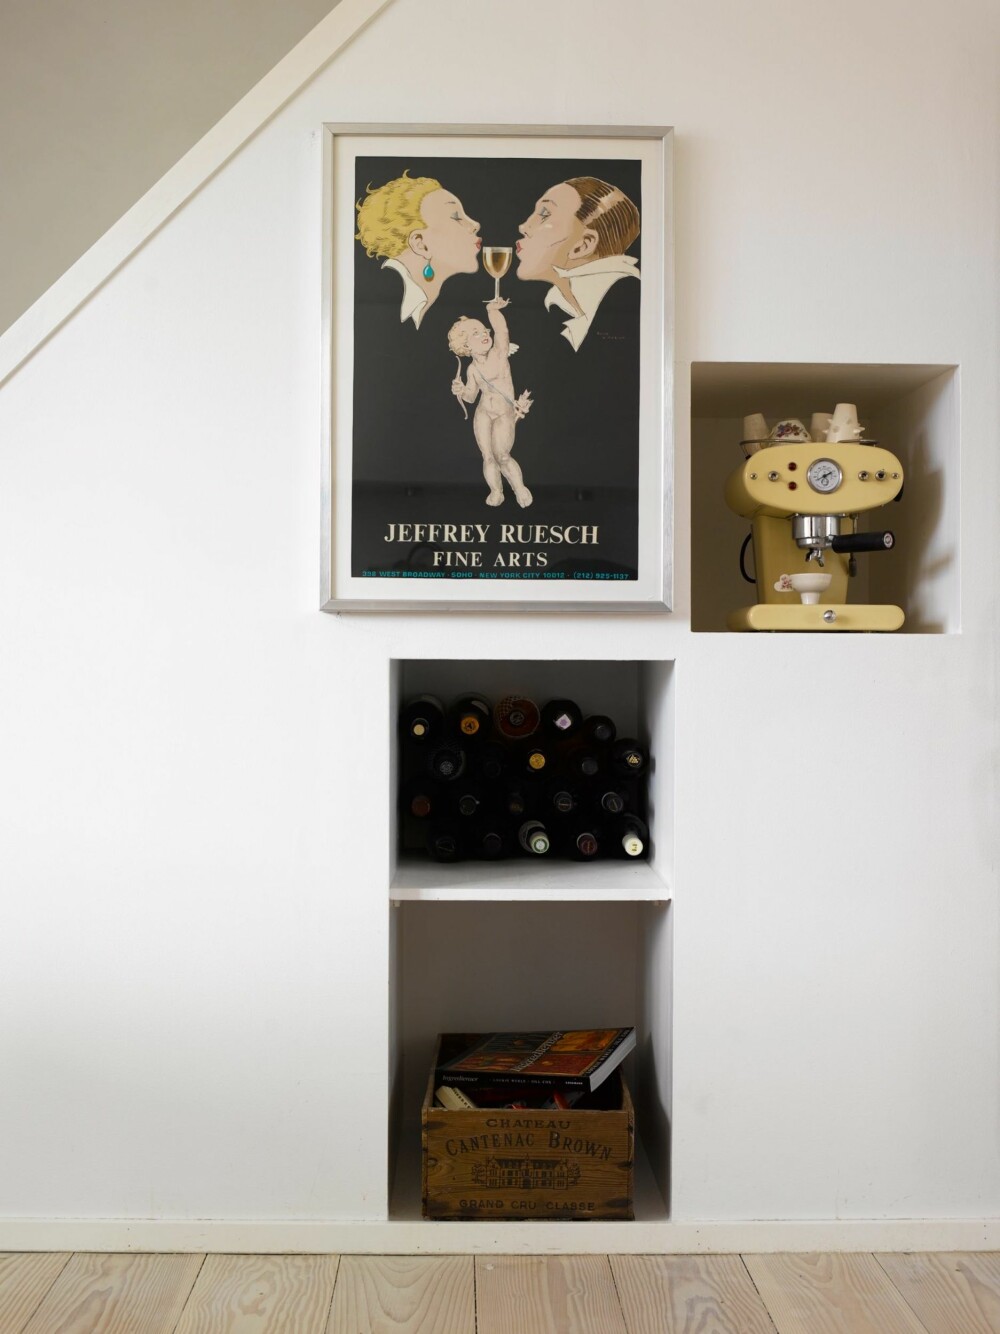 DEKORATIVT: På trappeveggen har både bilder fått plass, i tillegg til vinflasker.